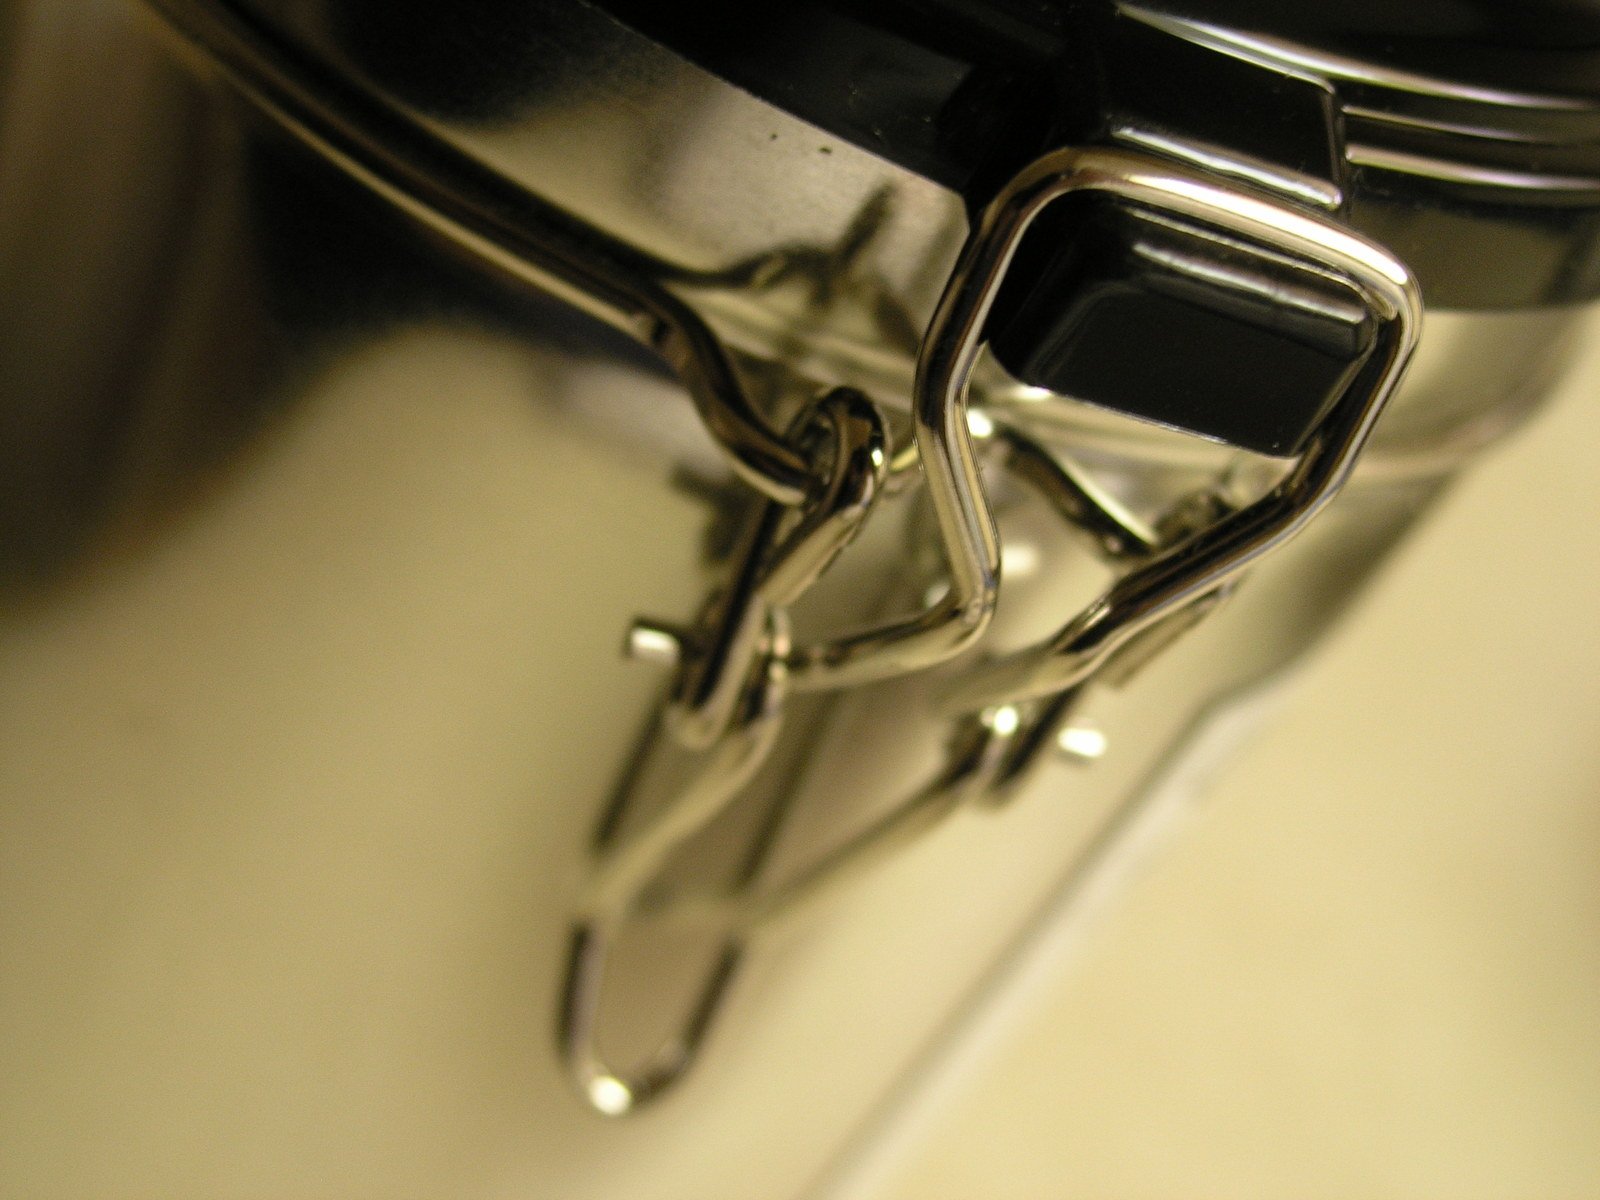 a close - up s of scissors in a kitchen sink